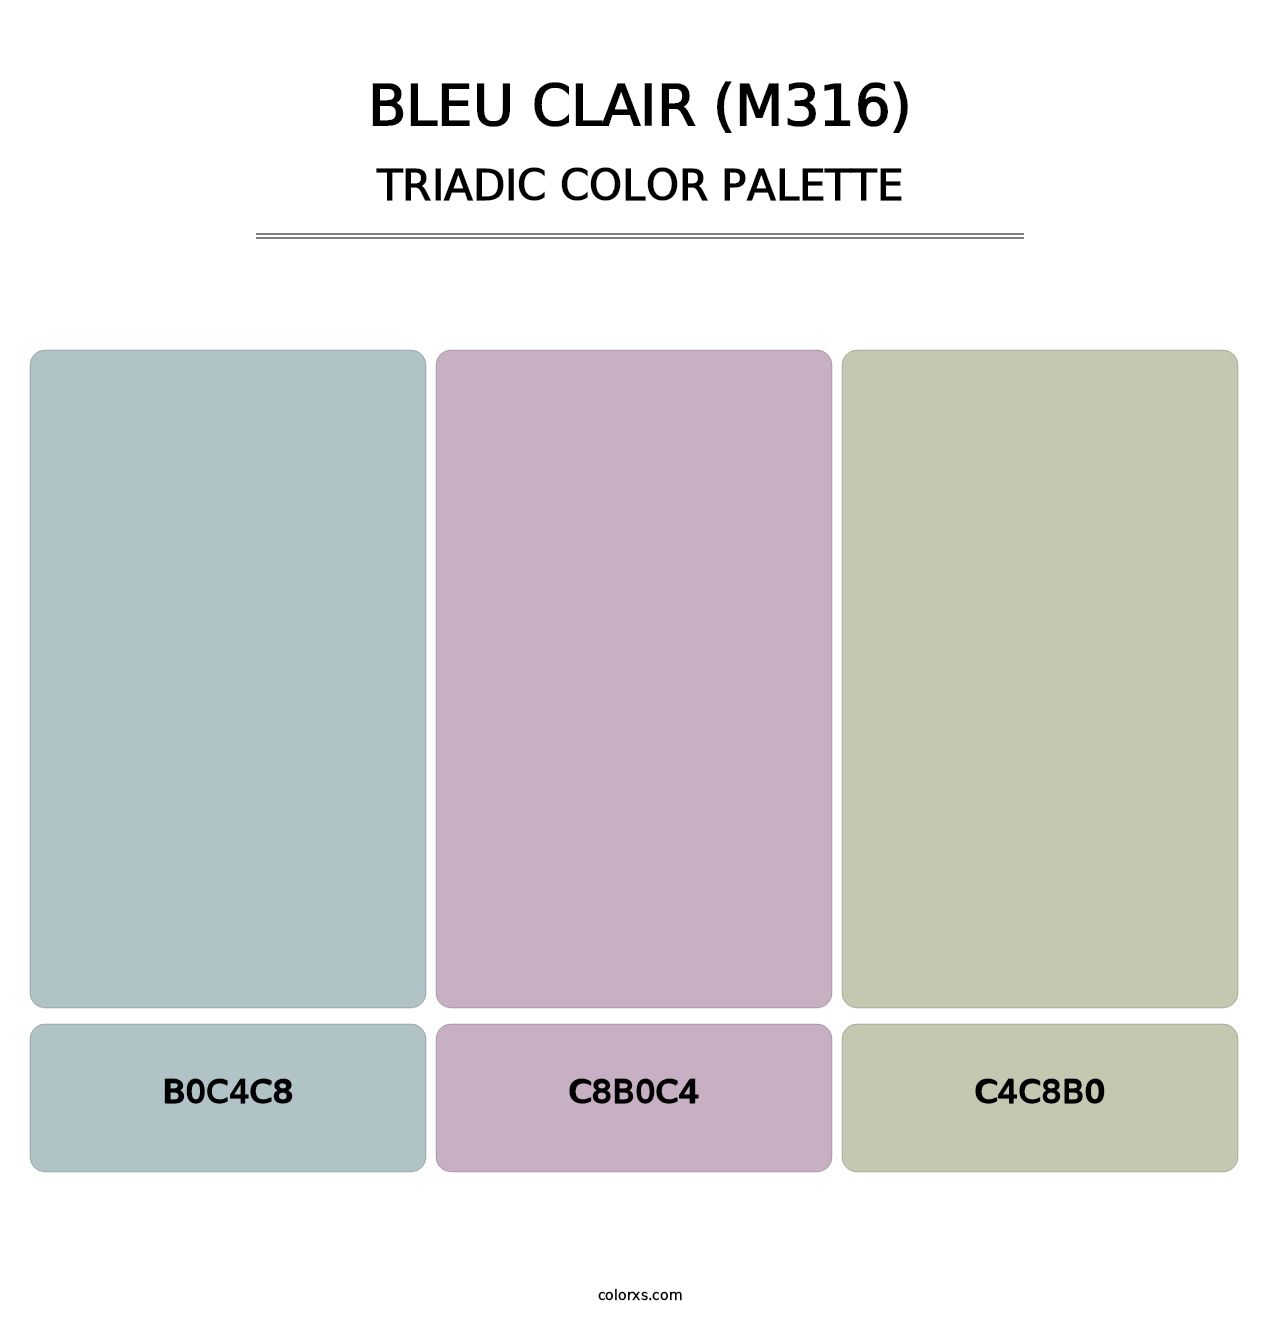 Bleu Clair (M316) - Triadic Color Palette